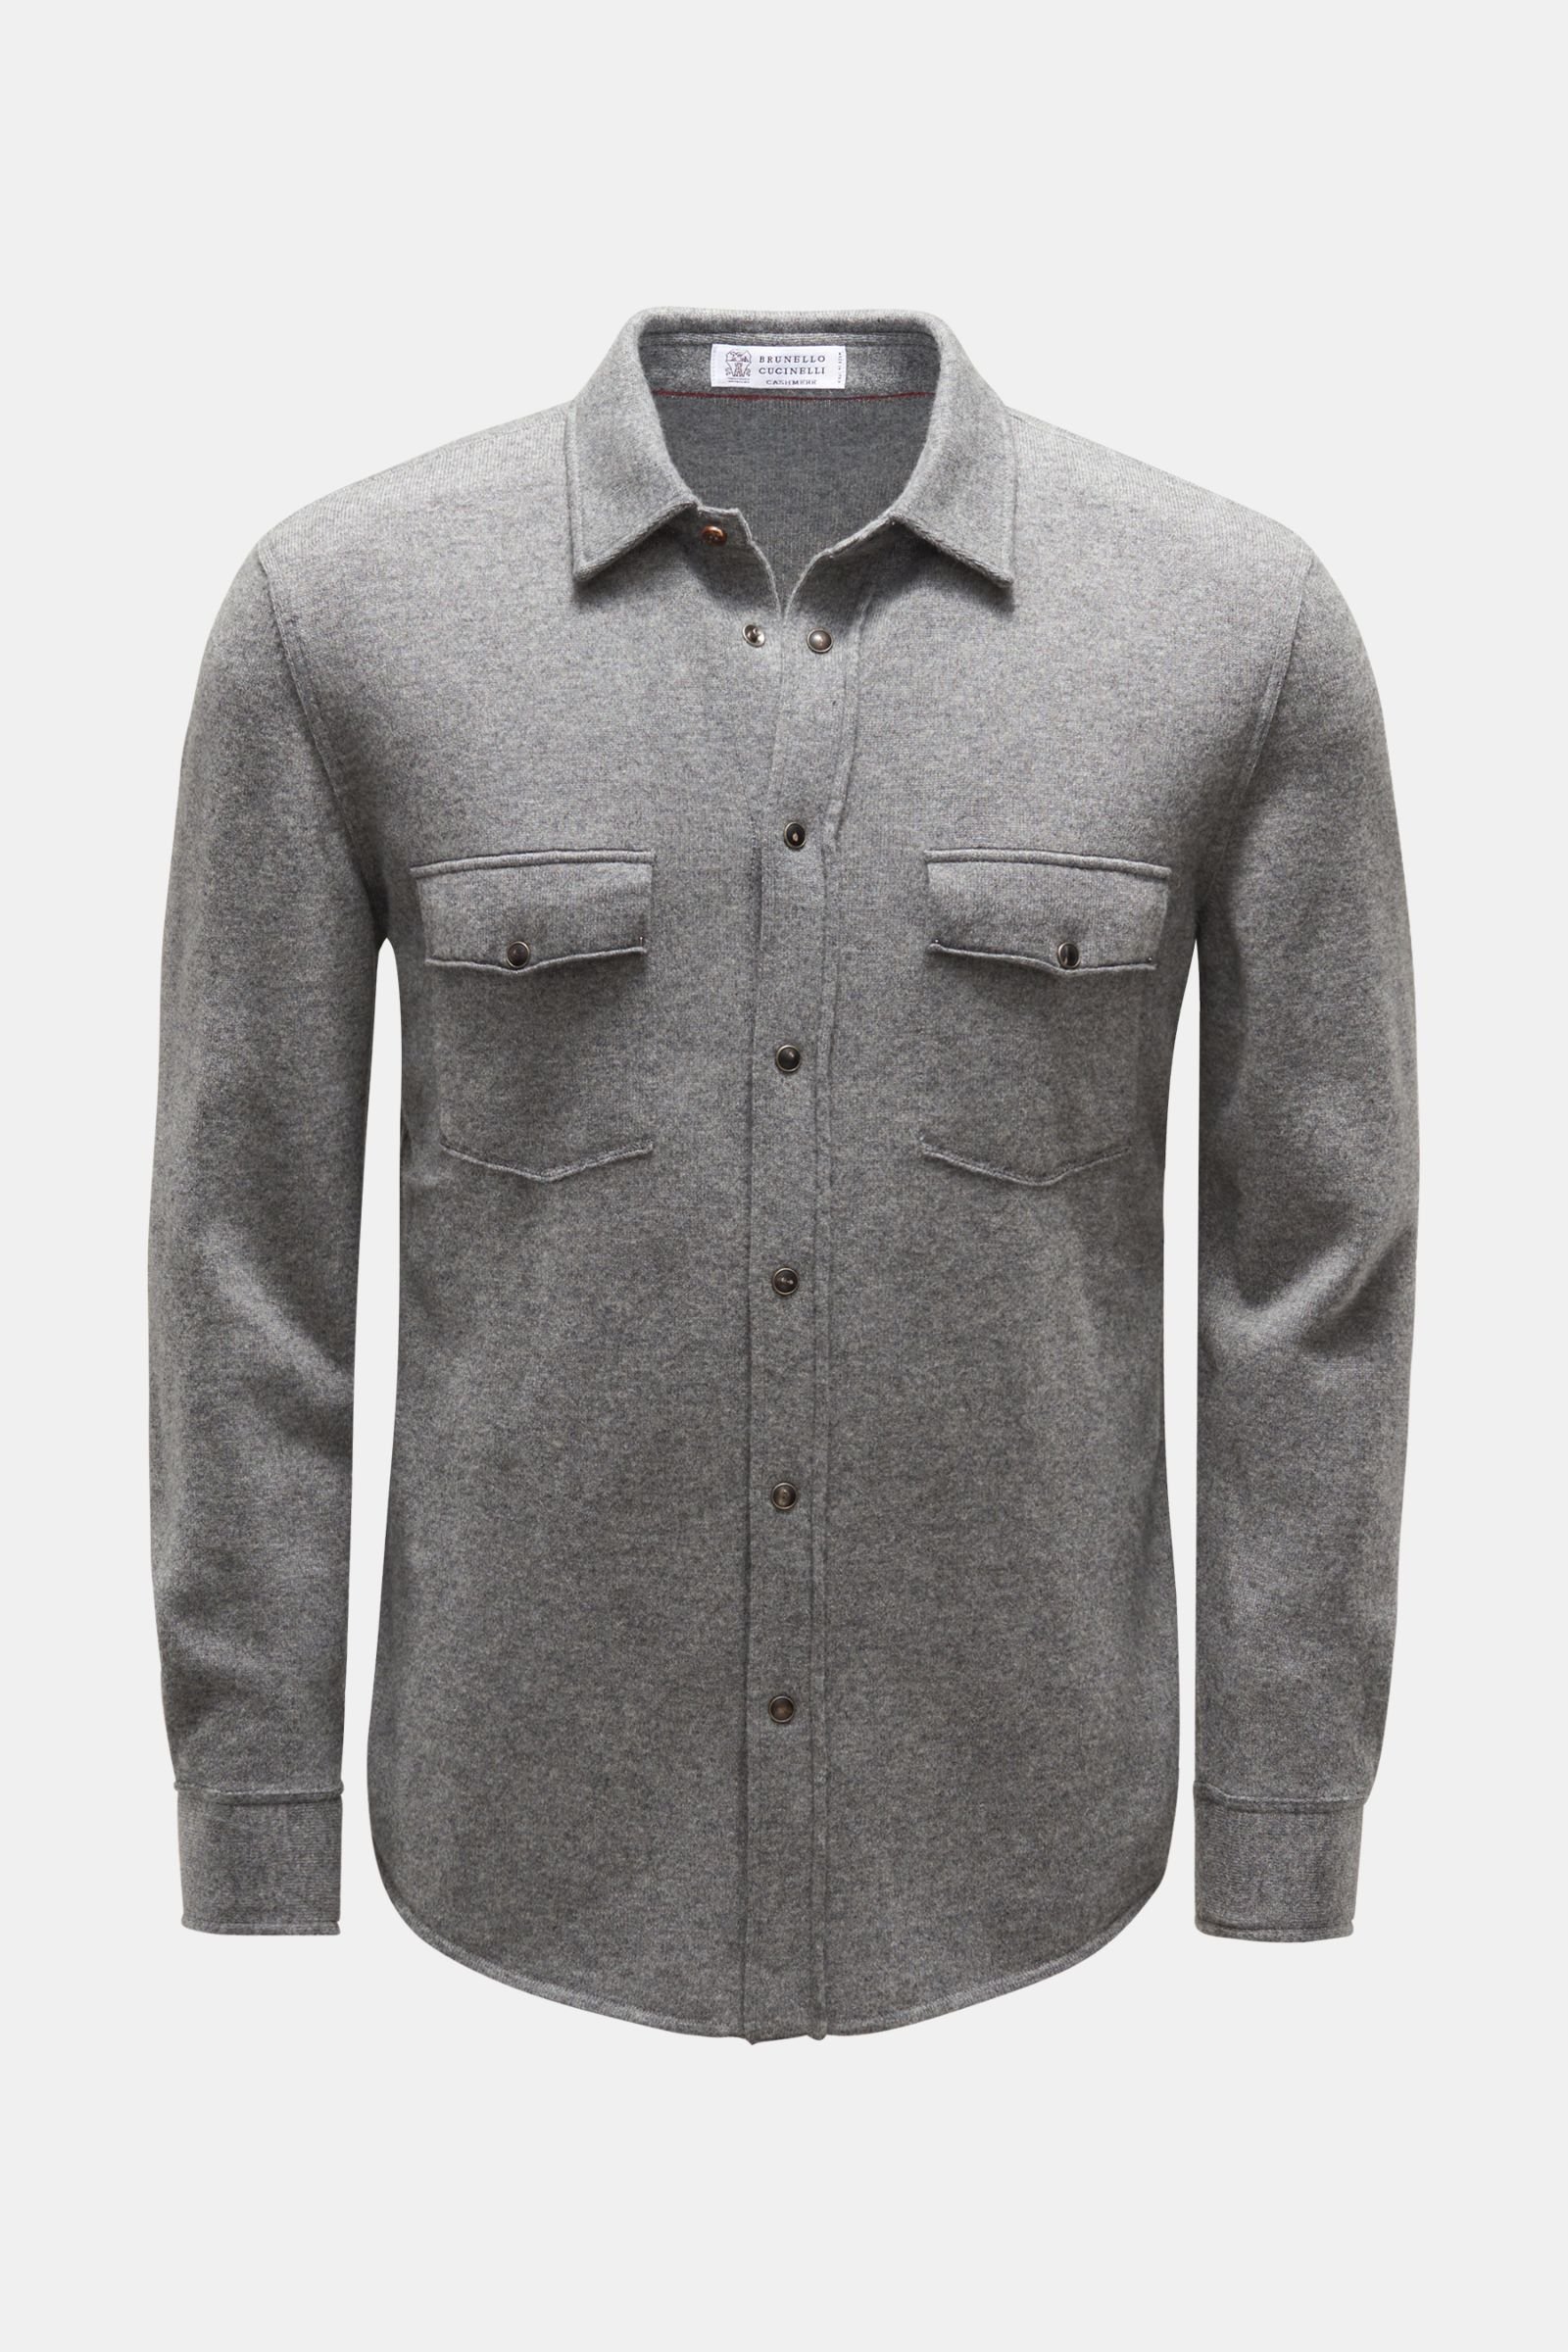 Overshirt grey